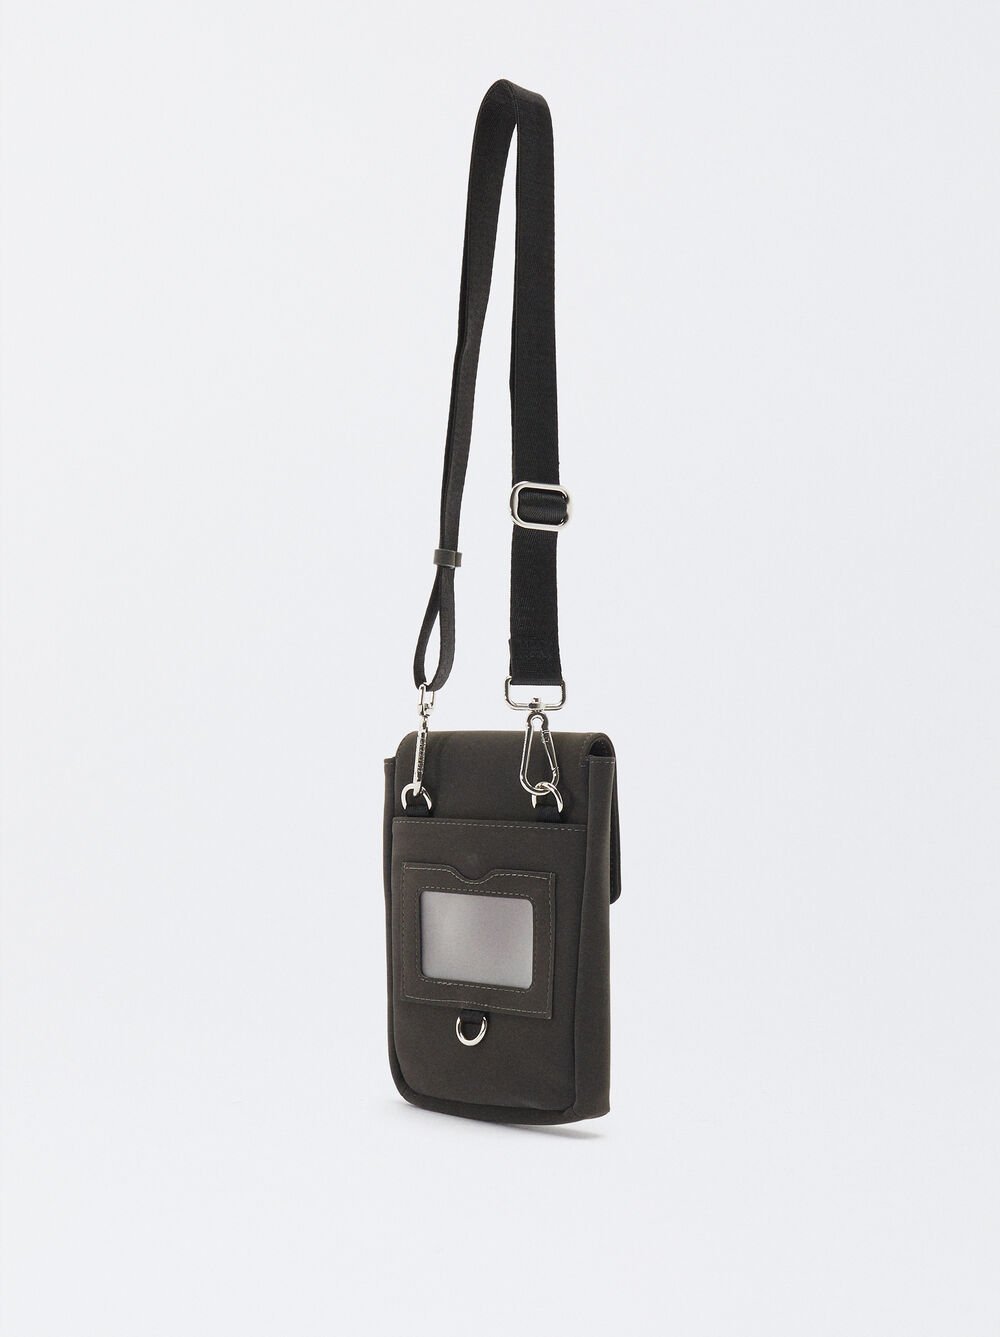 Mobile Phone Bag With Flap Closure